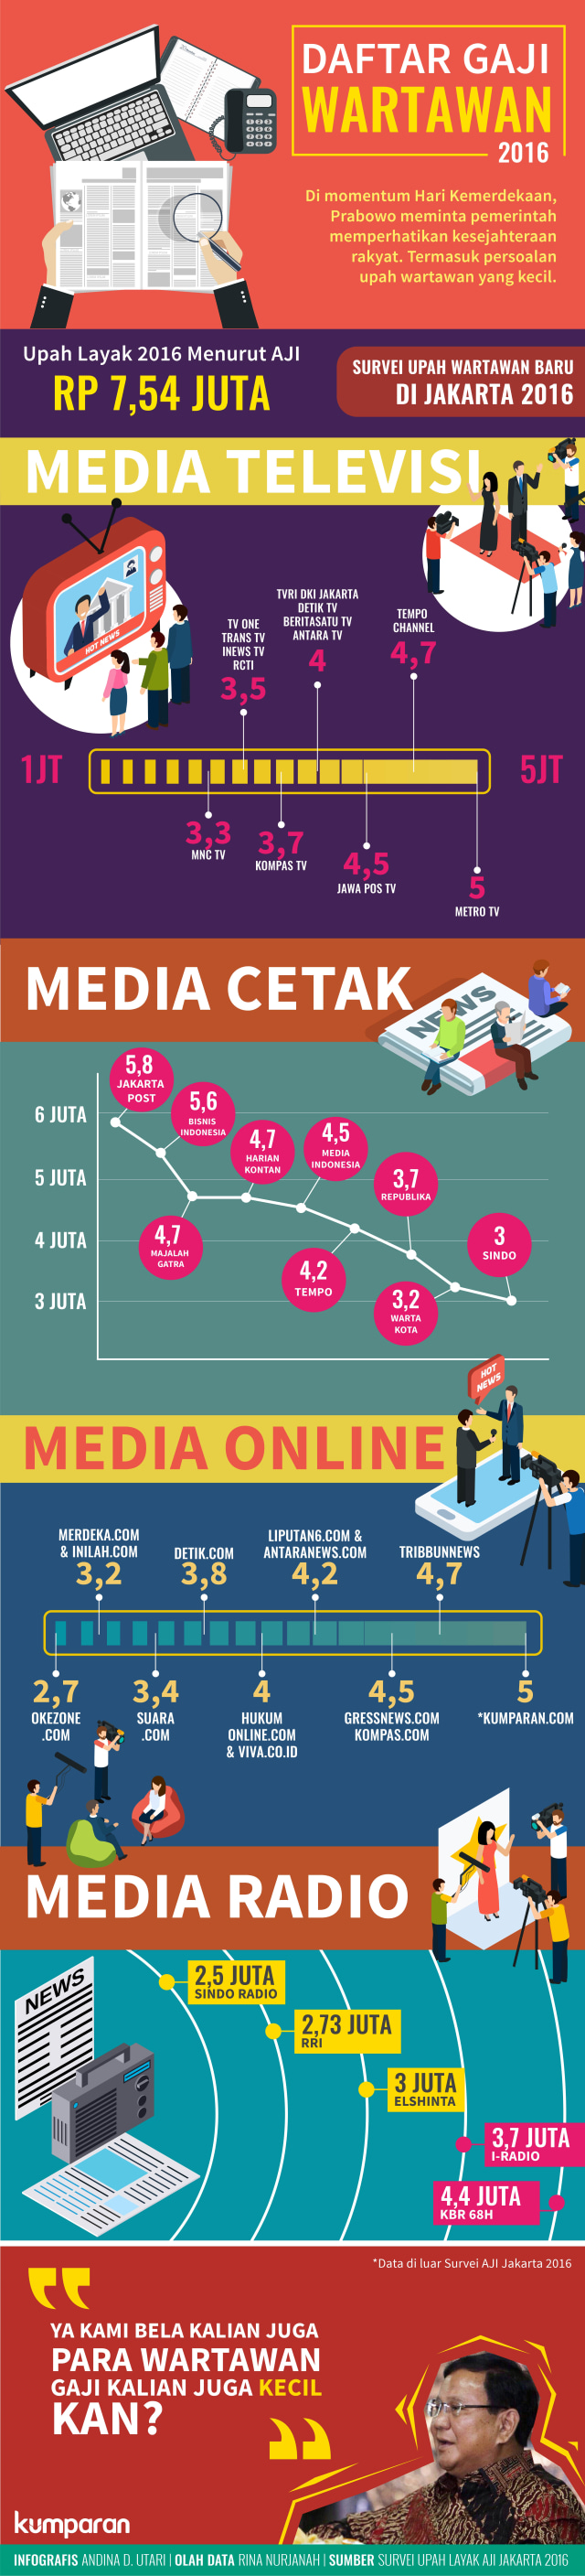 Infografis Daftar Gaji Wartawan 2016 (Foto: Andina D. Utari/kumparan)